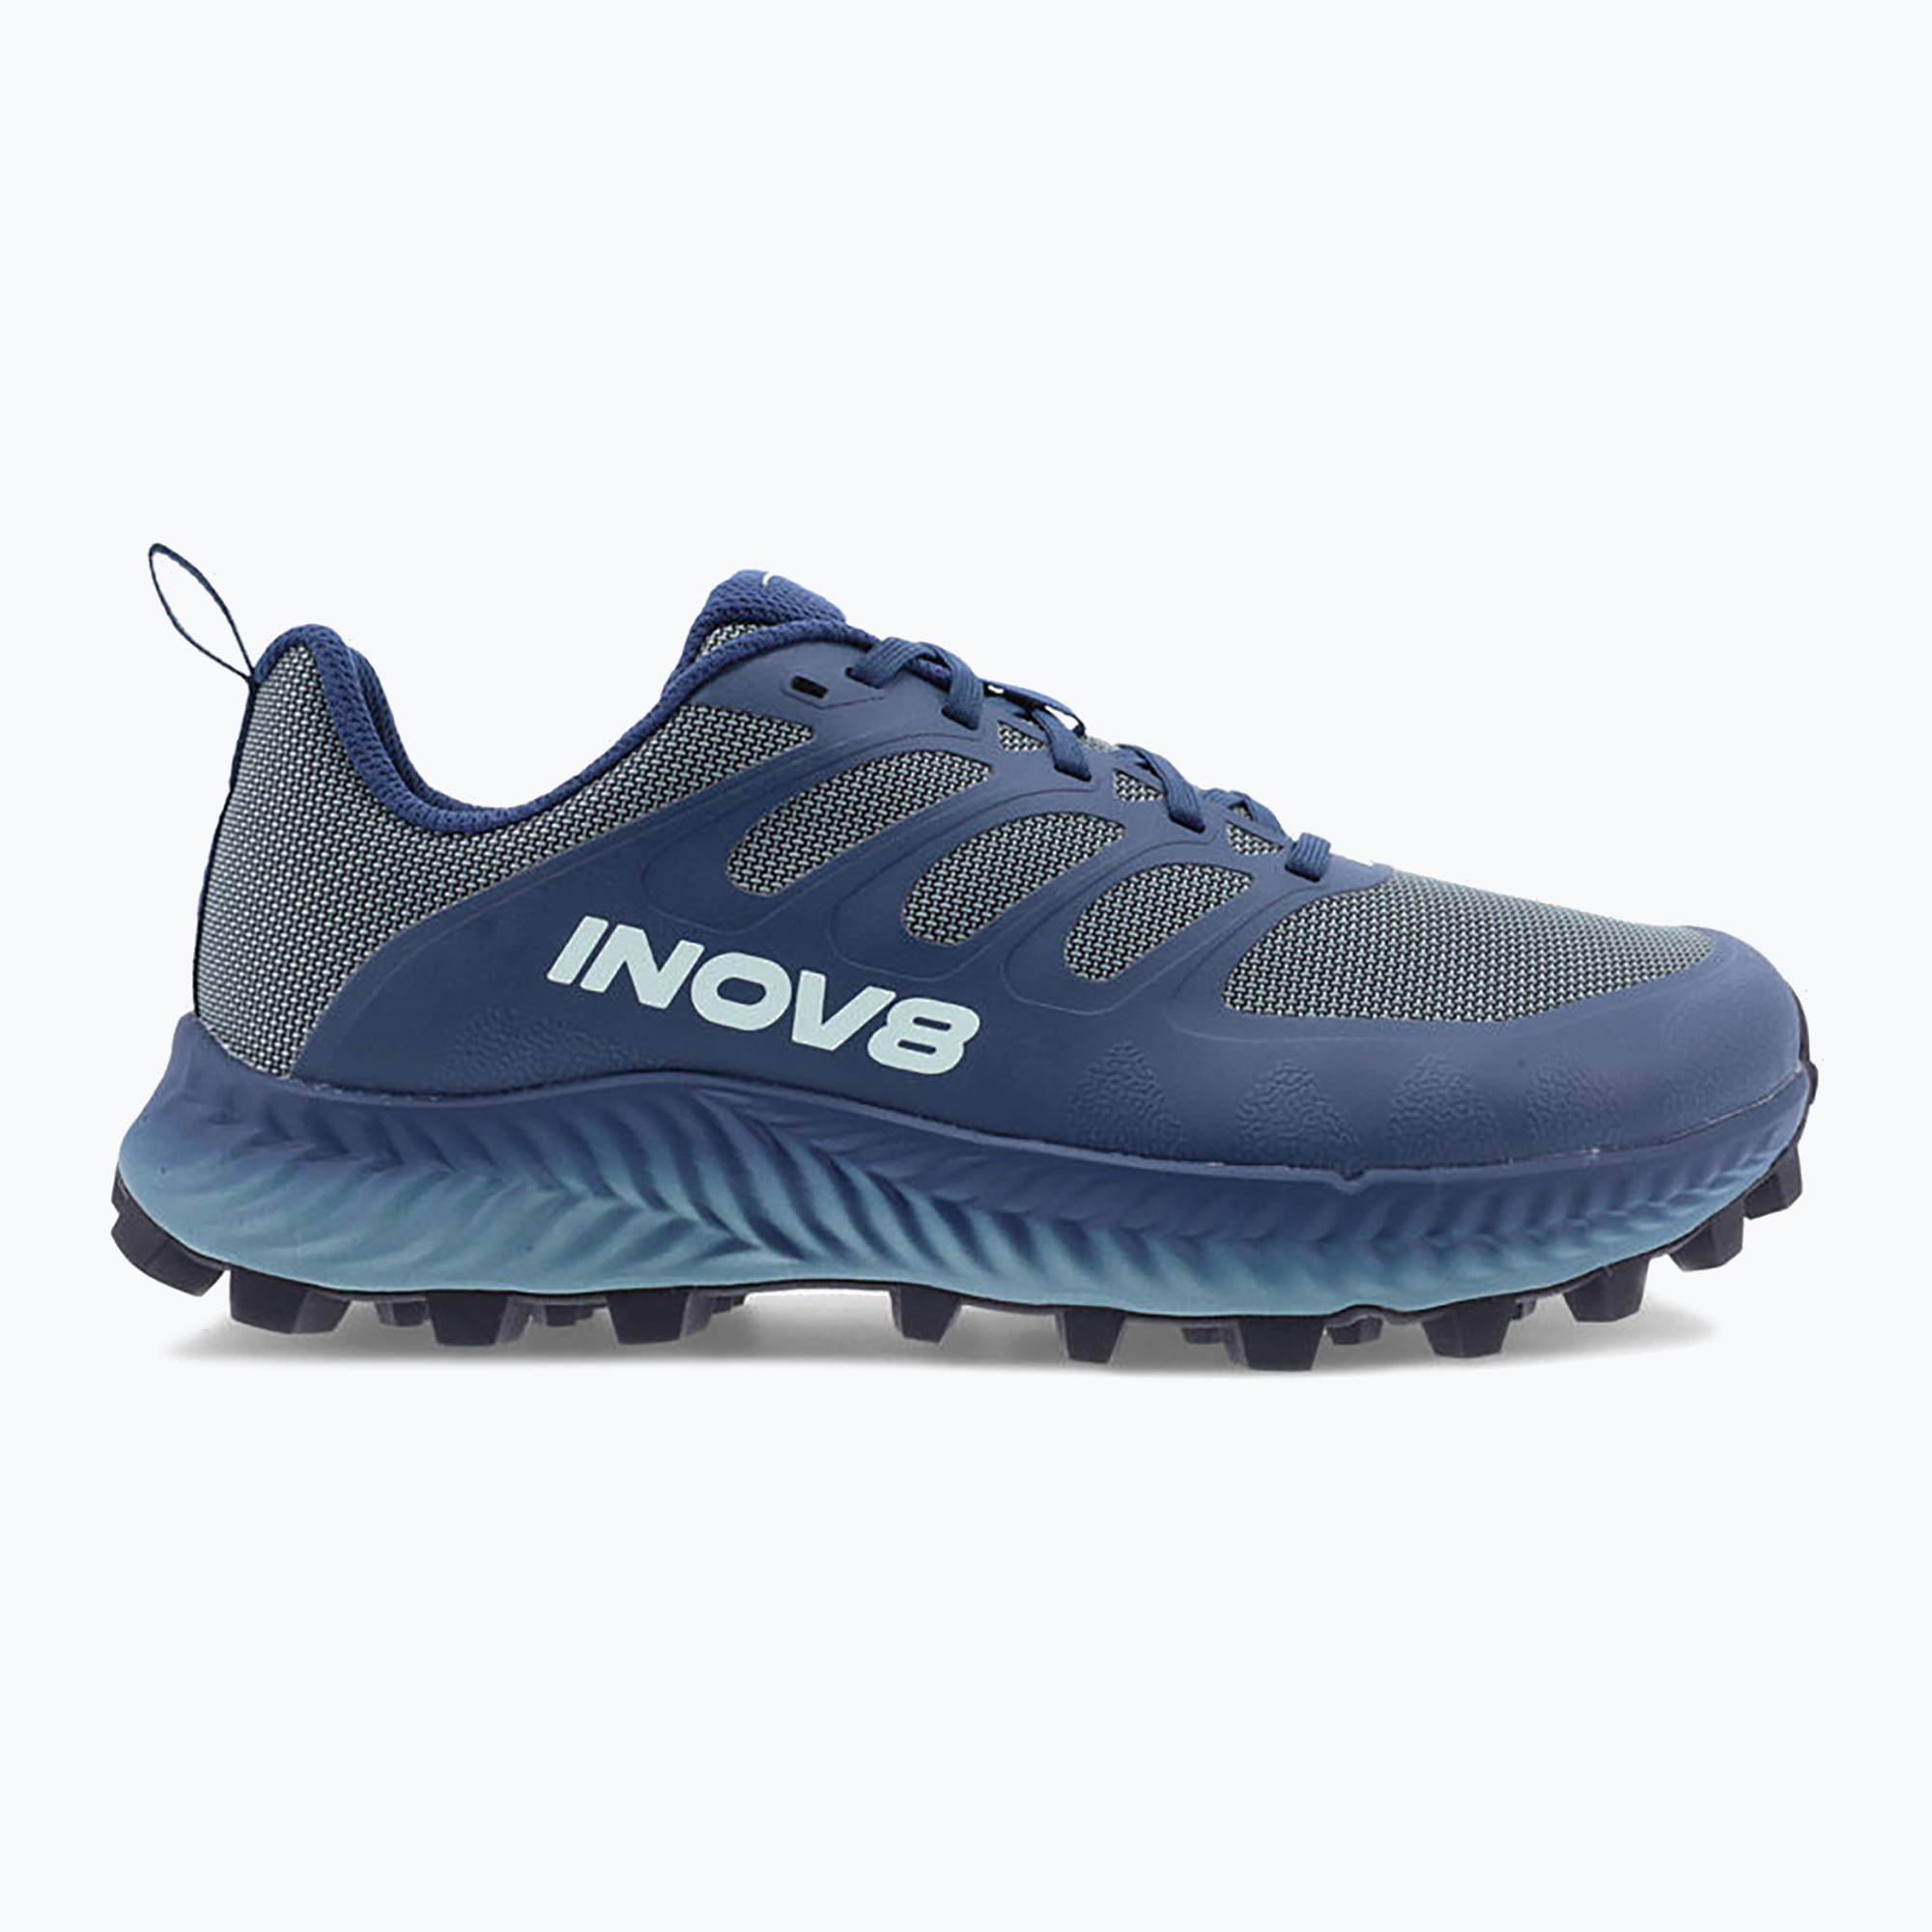 Дамски обувки за бягане Inov-8 Mudtalon storm blue/navy